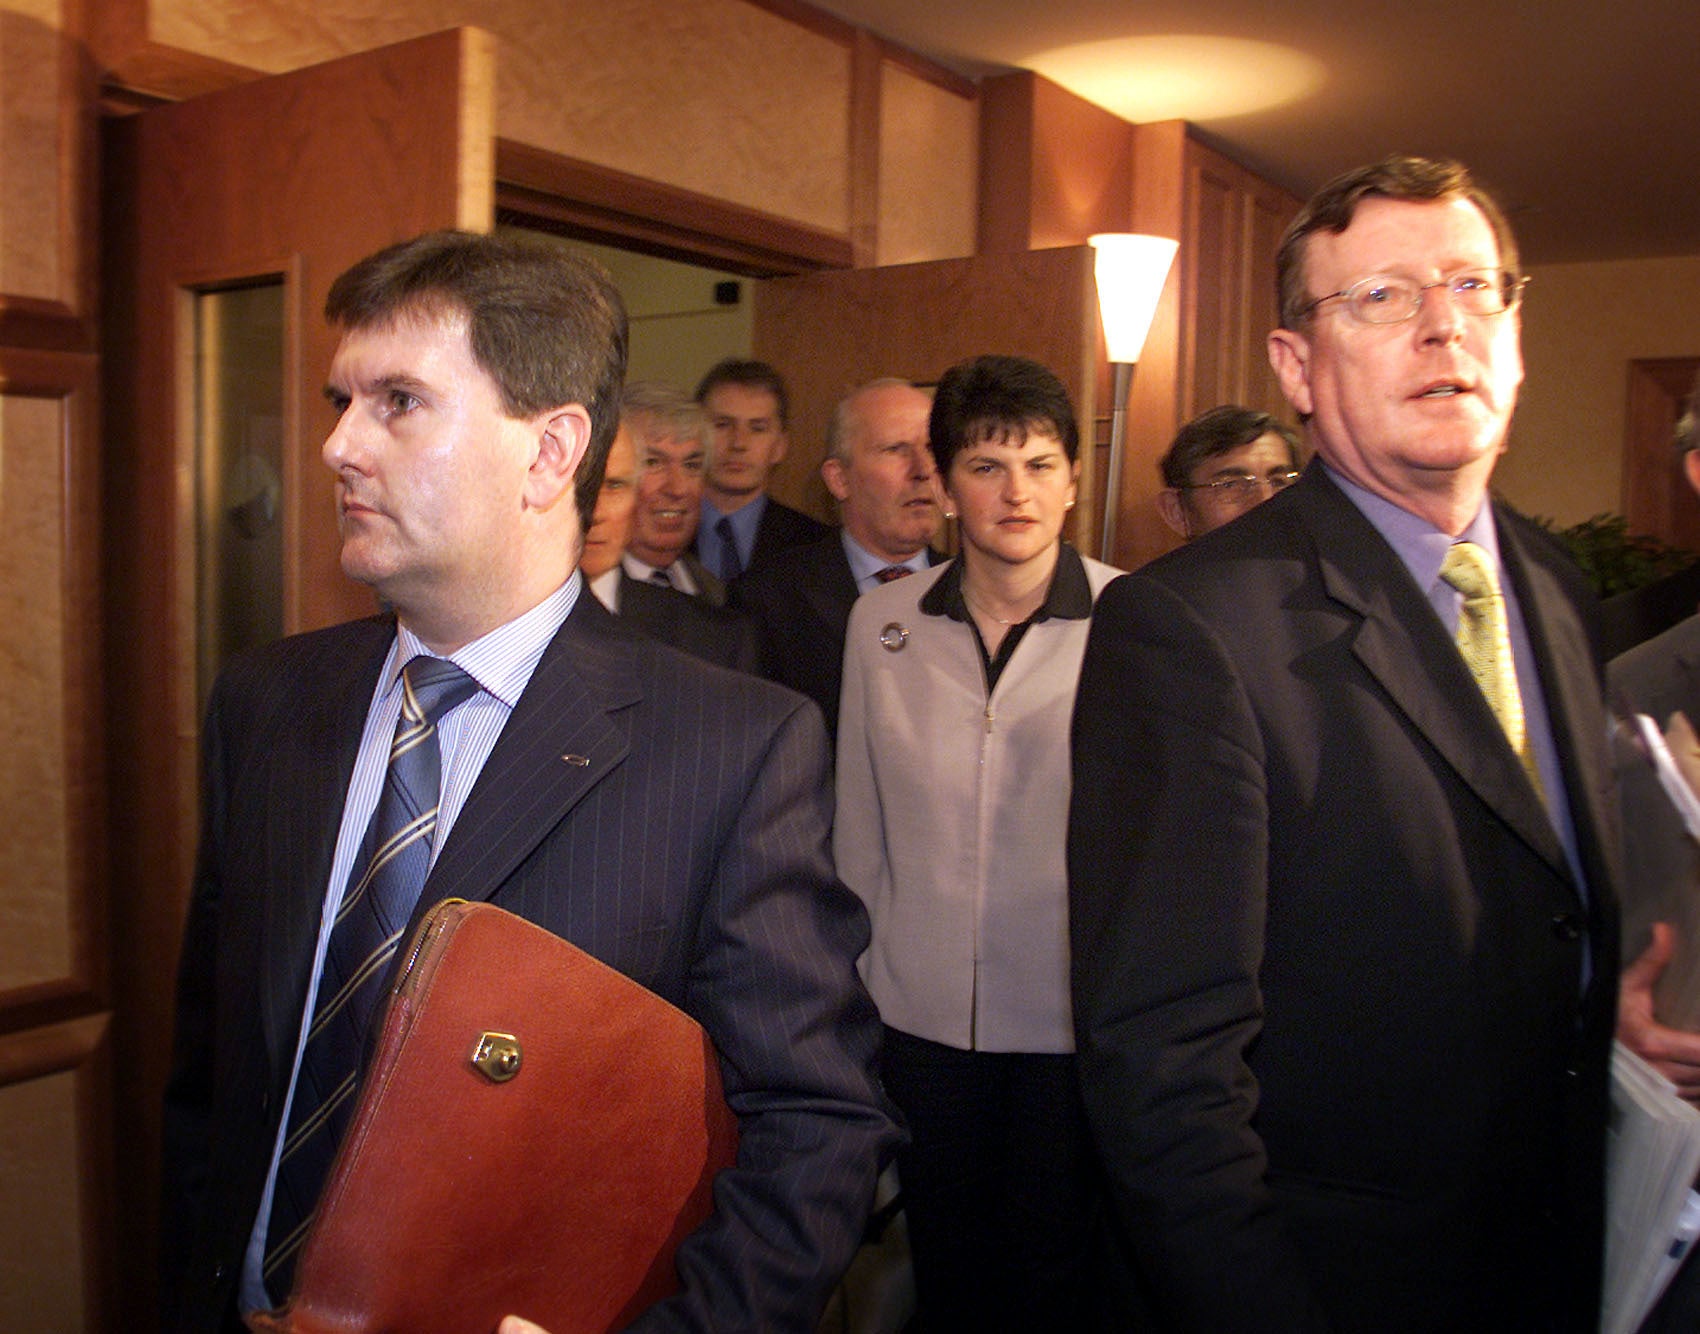 Sir Jeffrey Donaldson, left, quit the UUP, led by David Trimble, in 1993 (Paul Faith/PA)